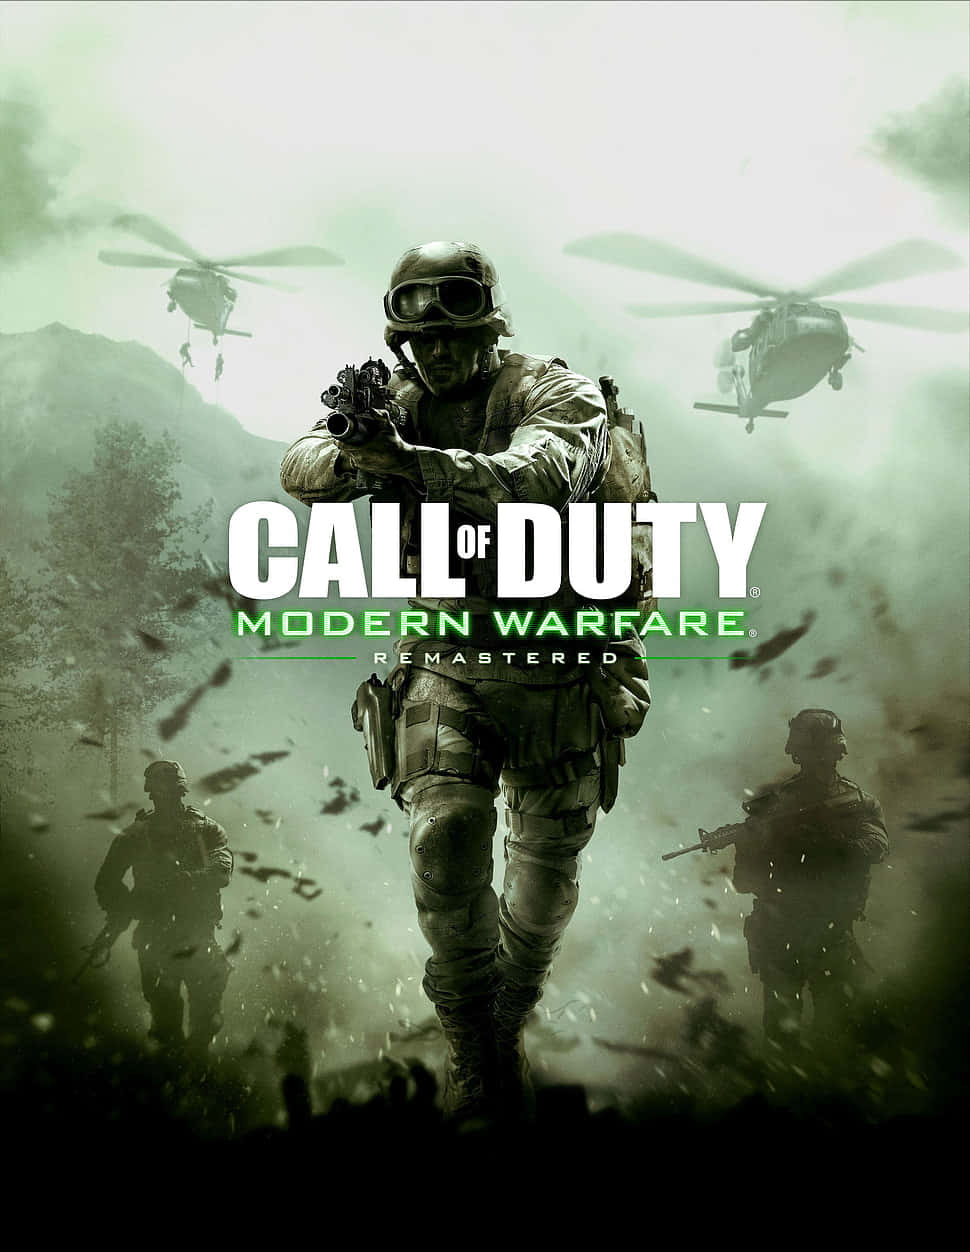 Affrontala Modern Warfare Con Call Of Duty Sfondo